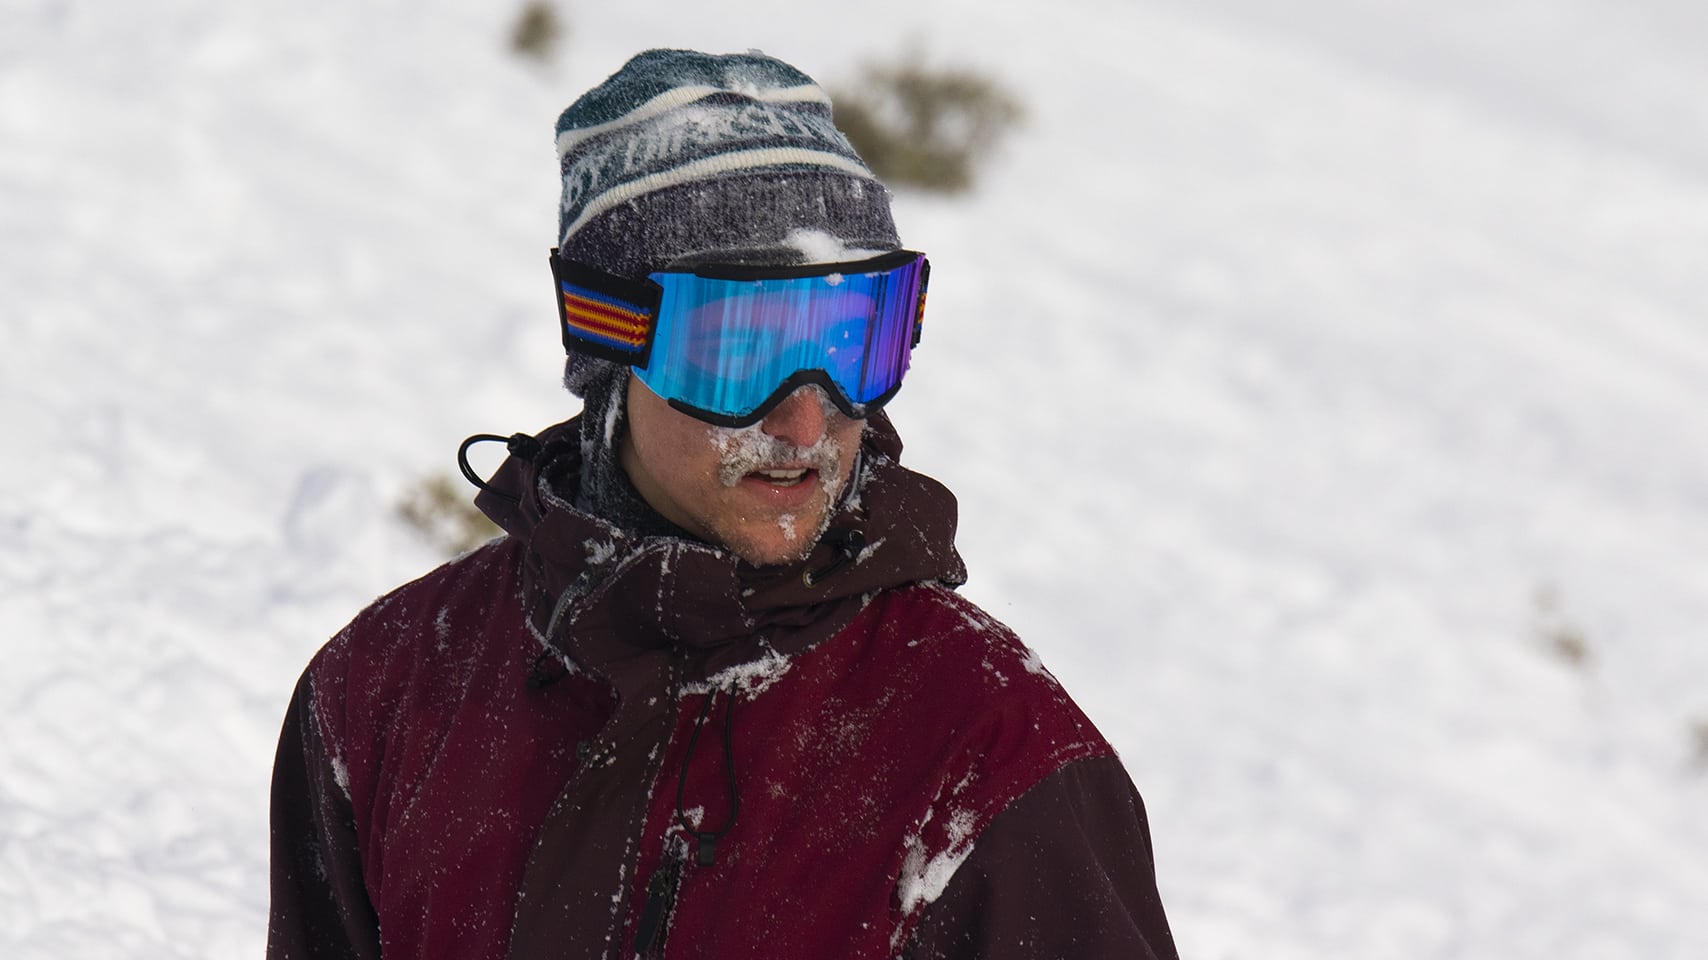 |Snow Goggle Schnee Ski Snowboard Brille SPY SN Goggle RAIDER W/BONUS LENS